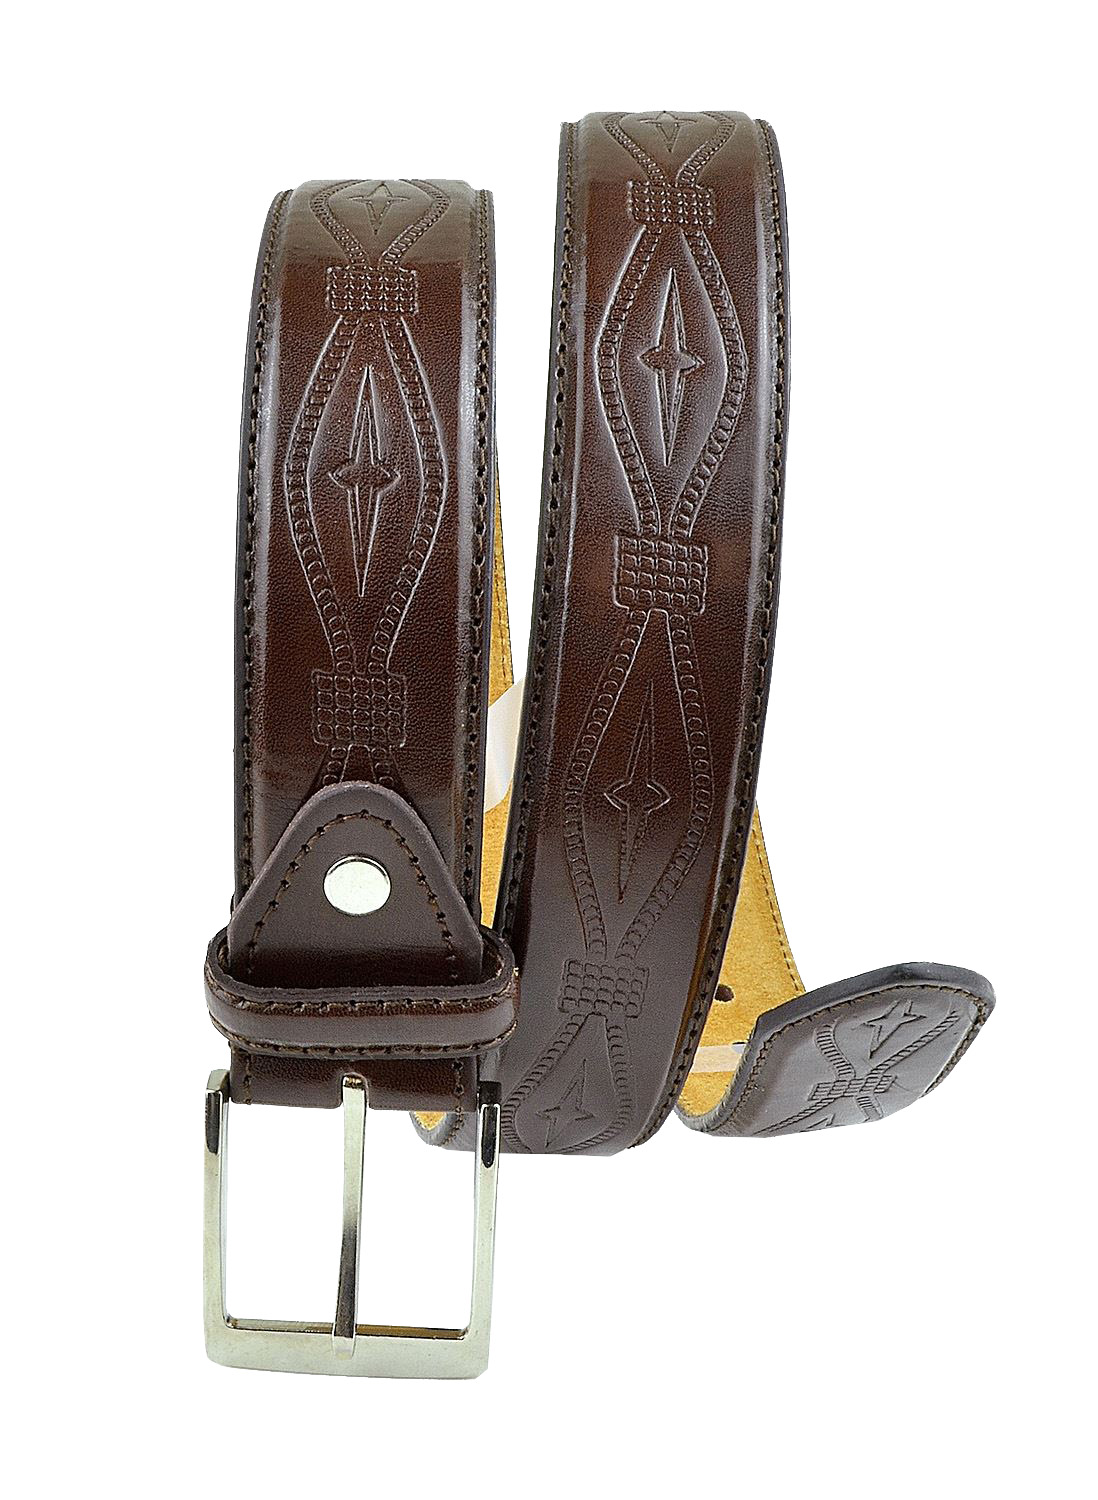 Moda Di Raza-Mens Leather Iron Cross Belt - Dress Belt - Silver Polished Square Buckle - Rustic Western Style Waist Belt - Single Prong Buckle - Brown